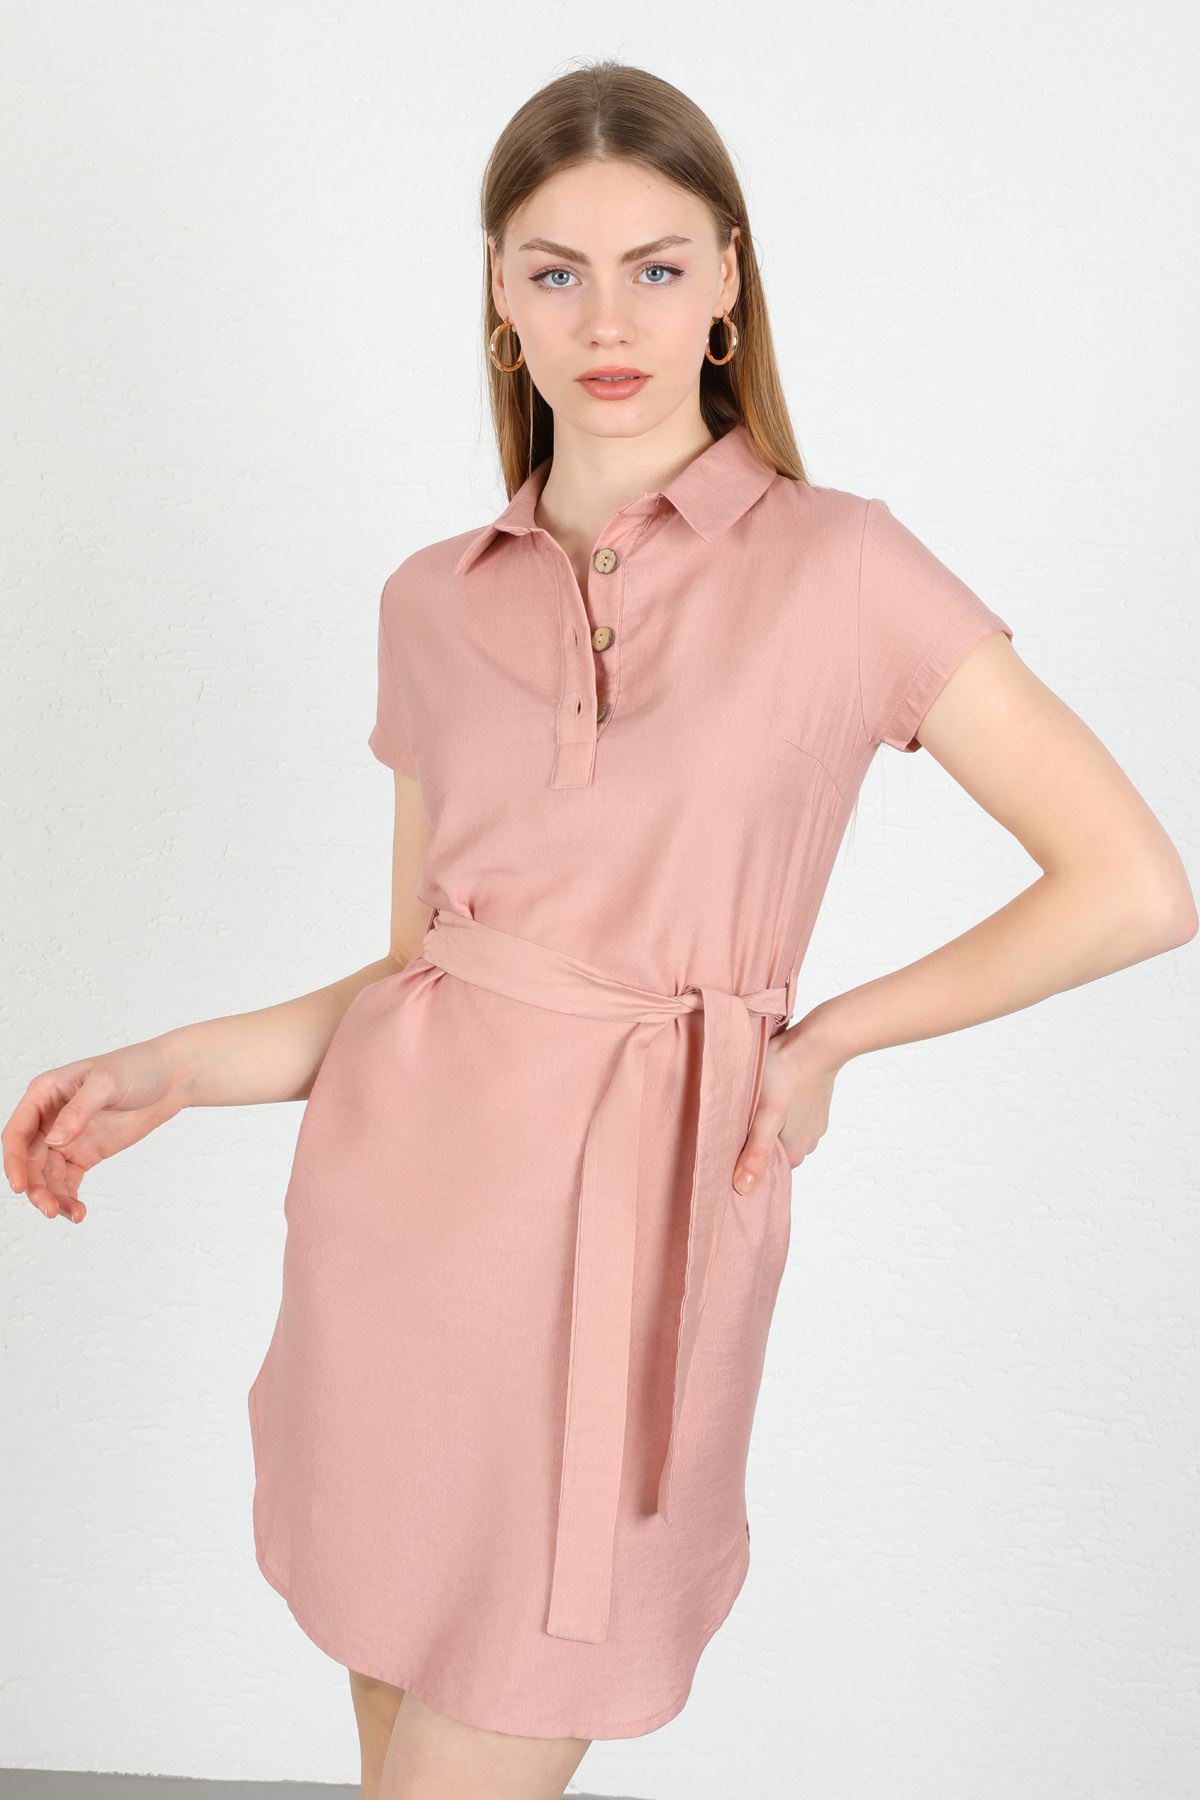 Submersible Fabric Shirt Collar Full Fit Buttoned Women Dress - Light Pink